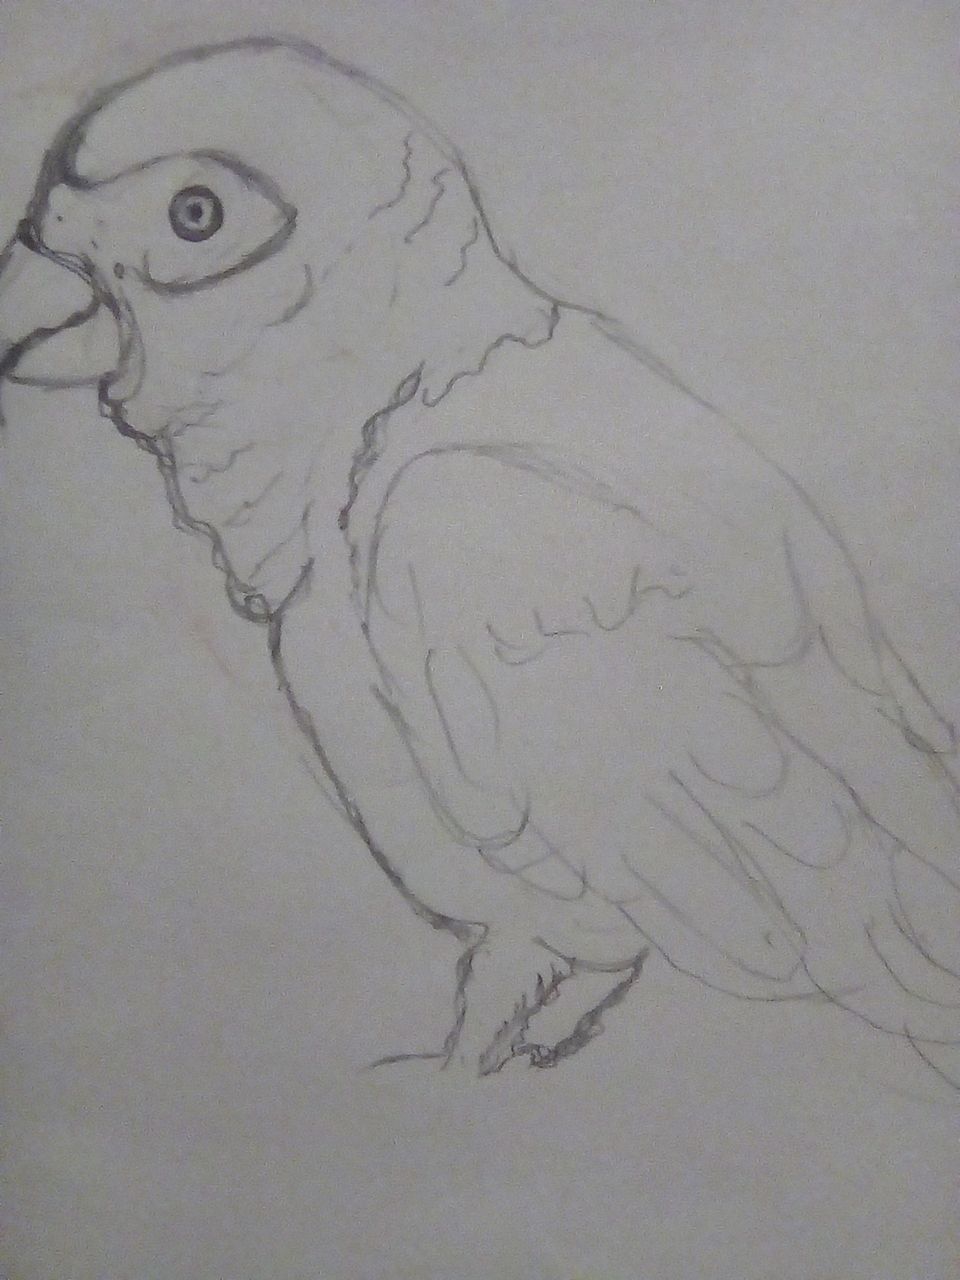 Parrot sketch Vectors & Illustrations for Free Download | Freepik